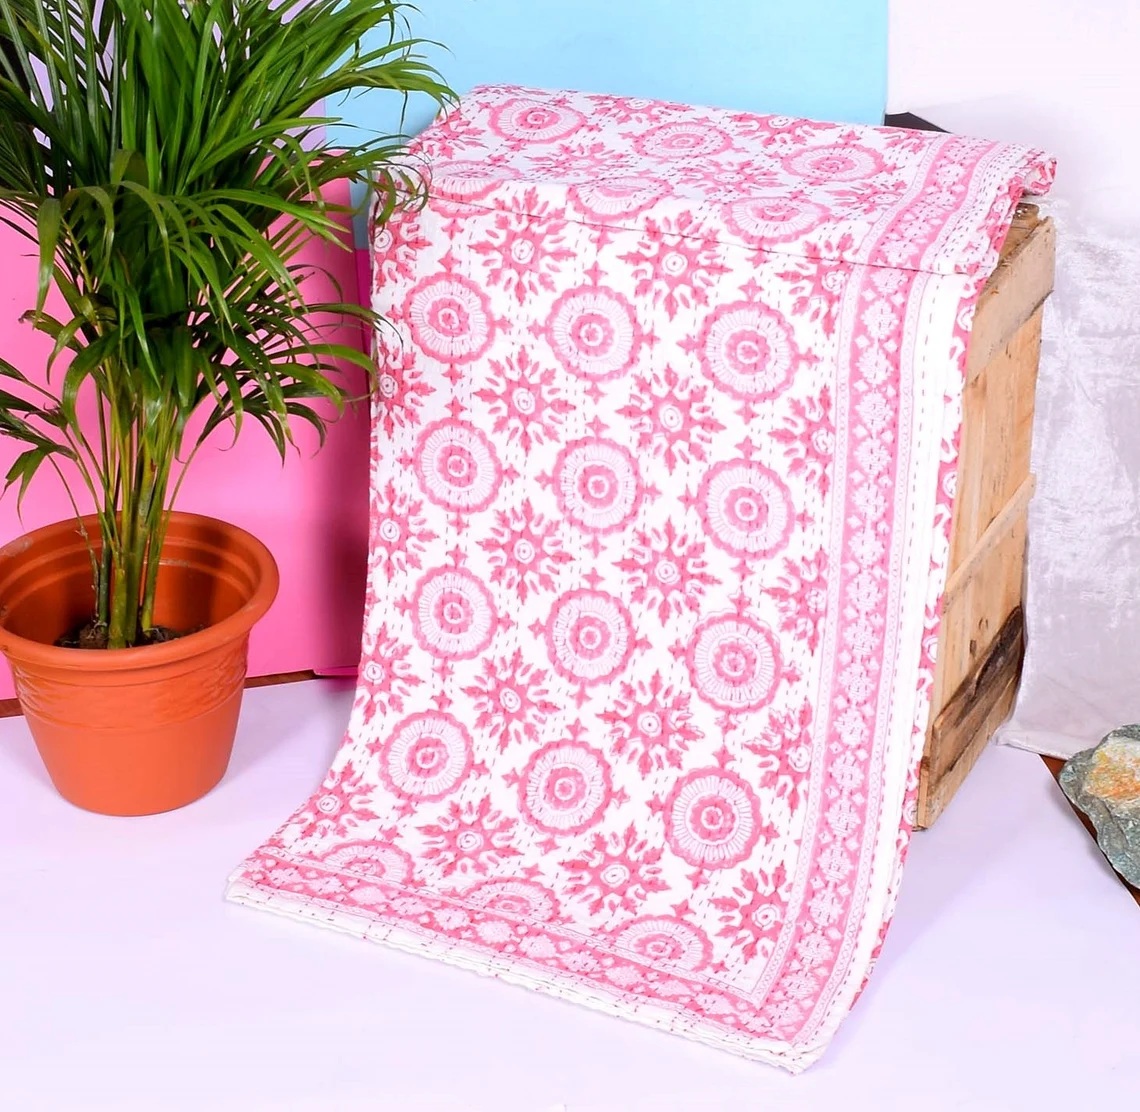 Details about   Pink Ikat Kantha Quilt Queen Bedding Reversible Handmade Indian Blanket Throw 